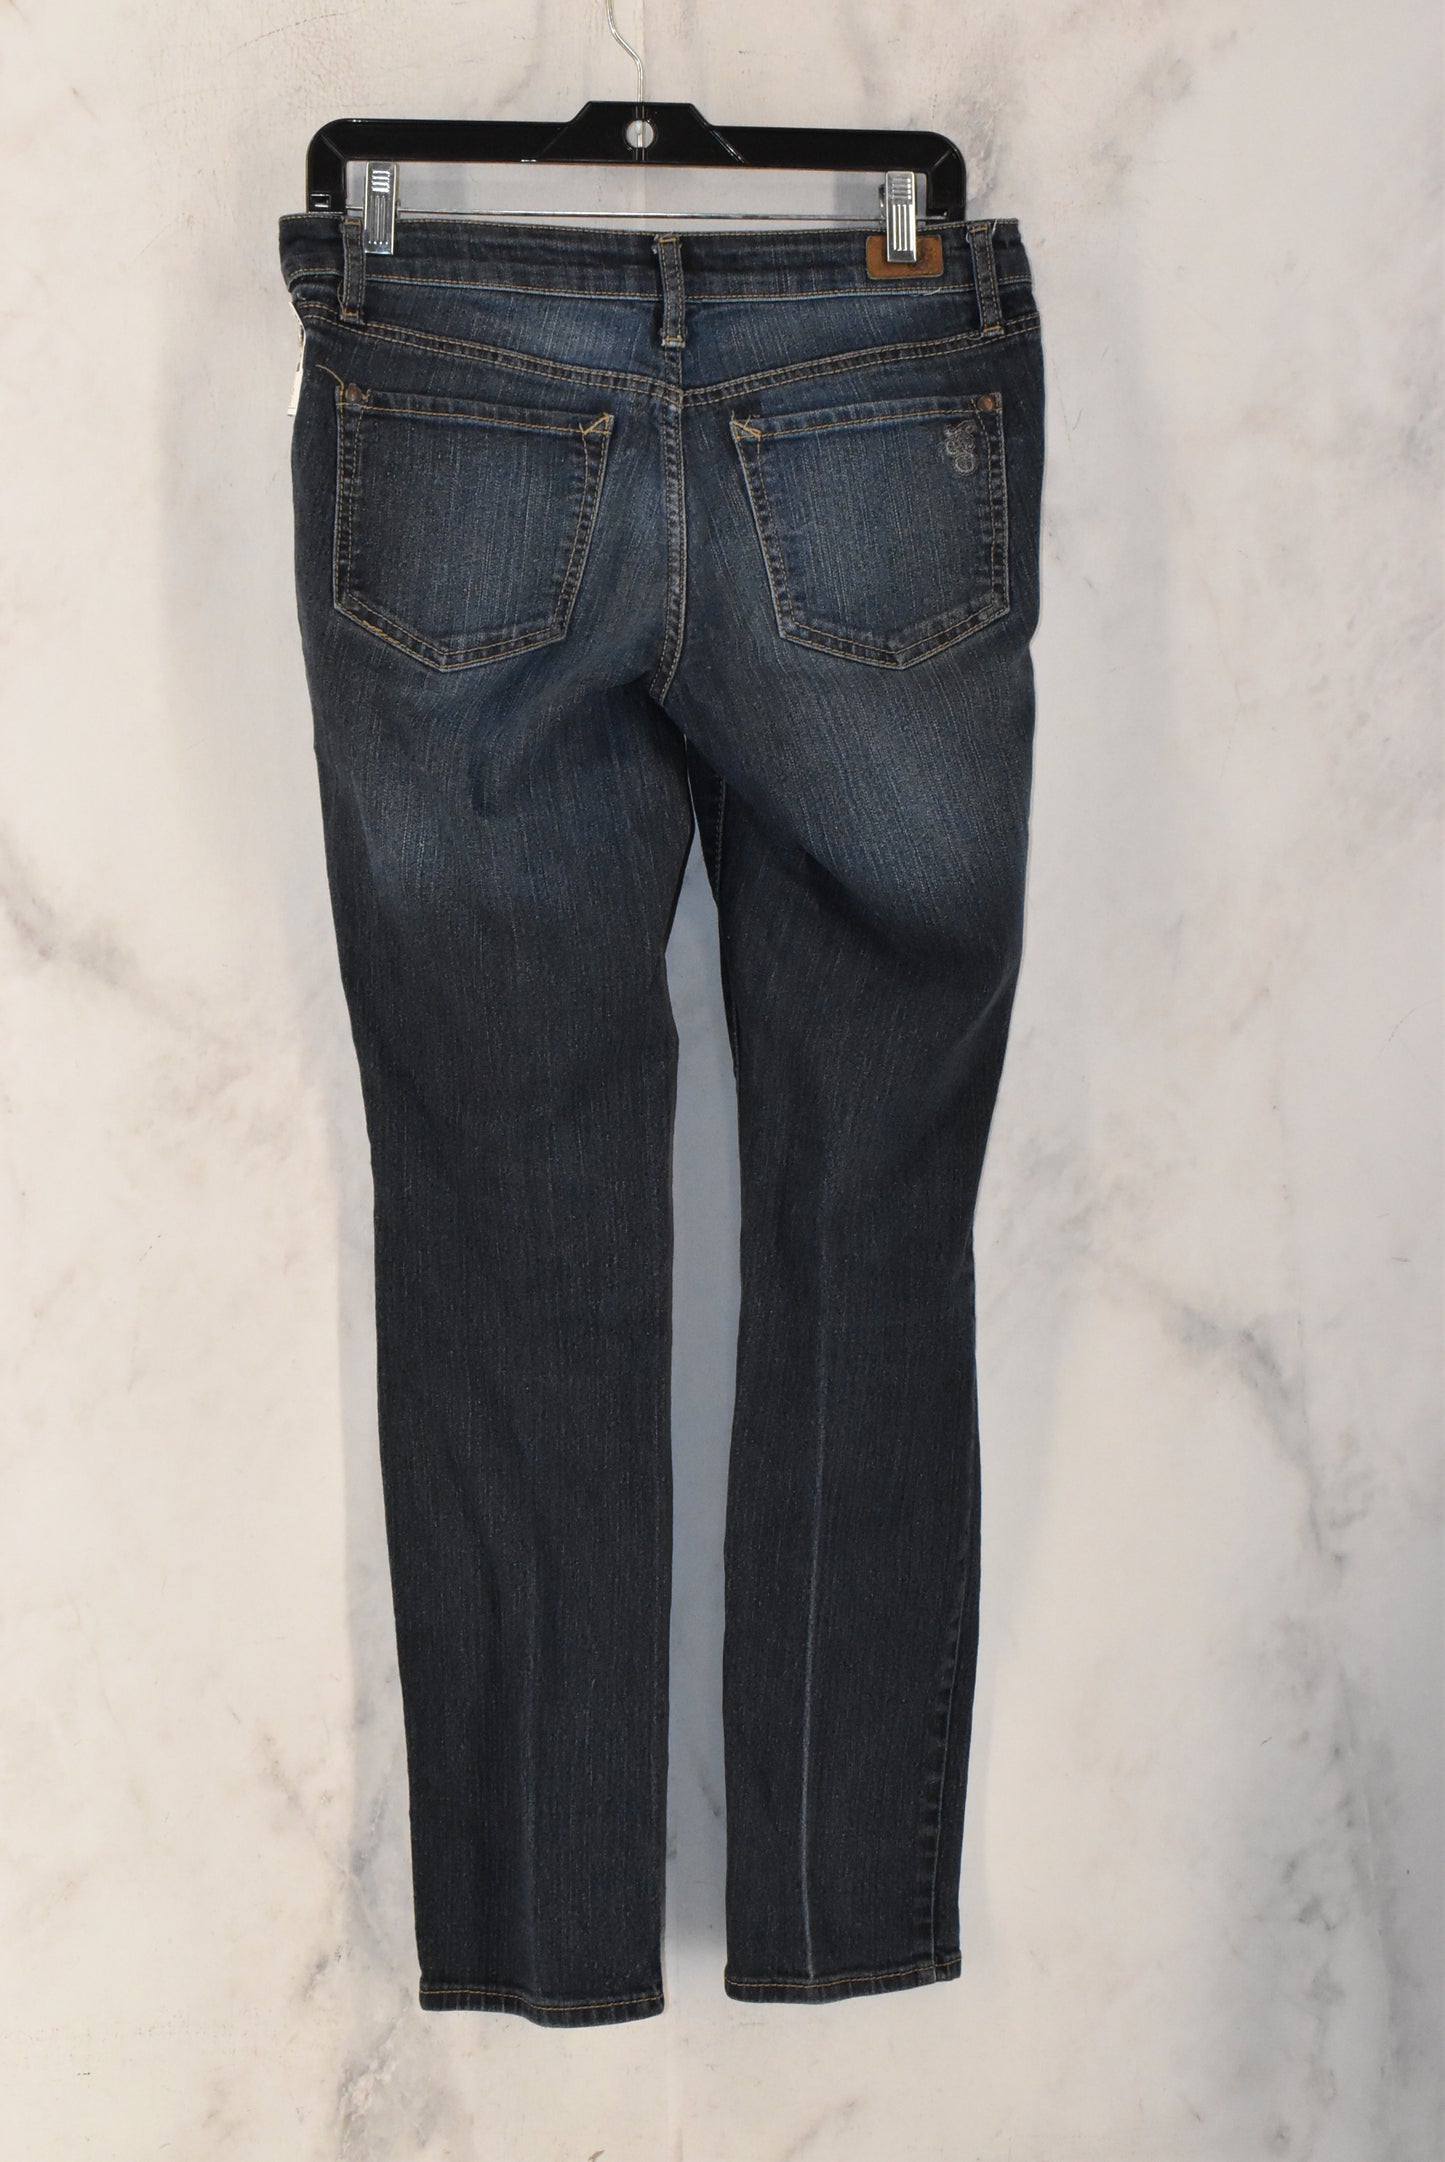 Jeans Skinny By Jessica Simpson  Size: 29